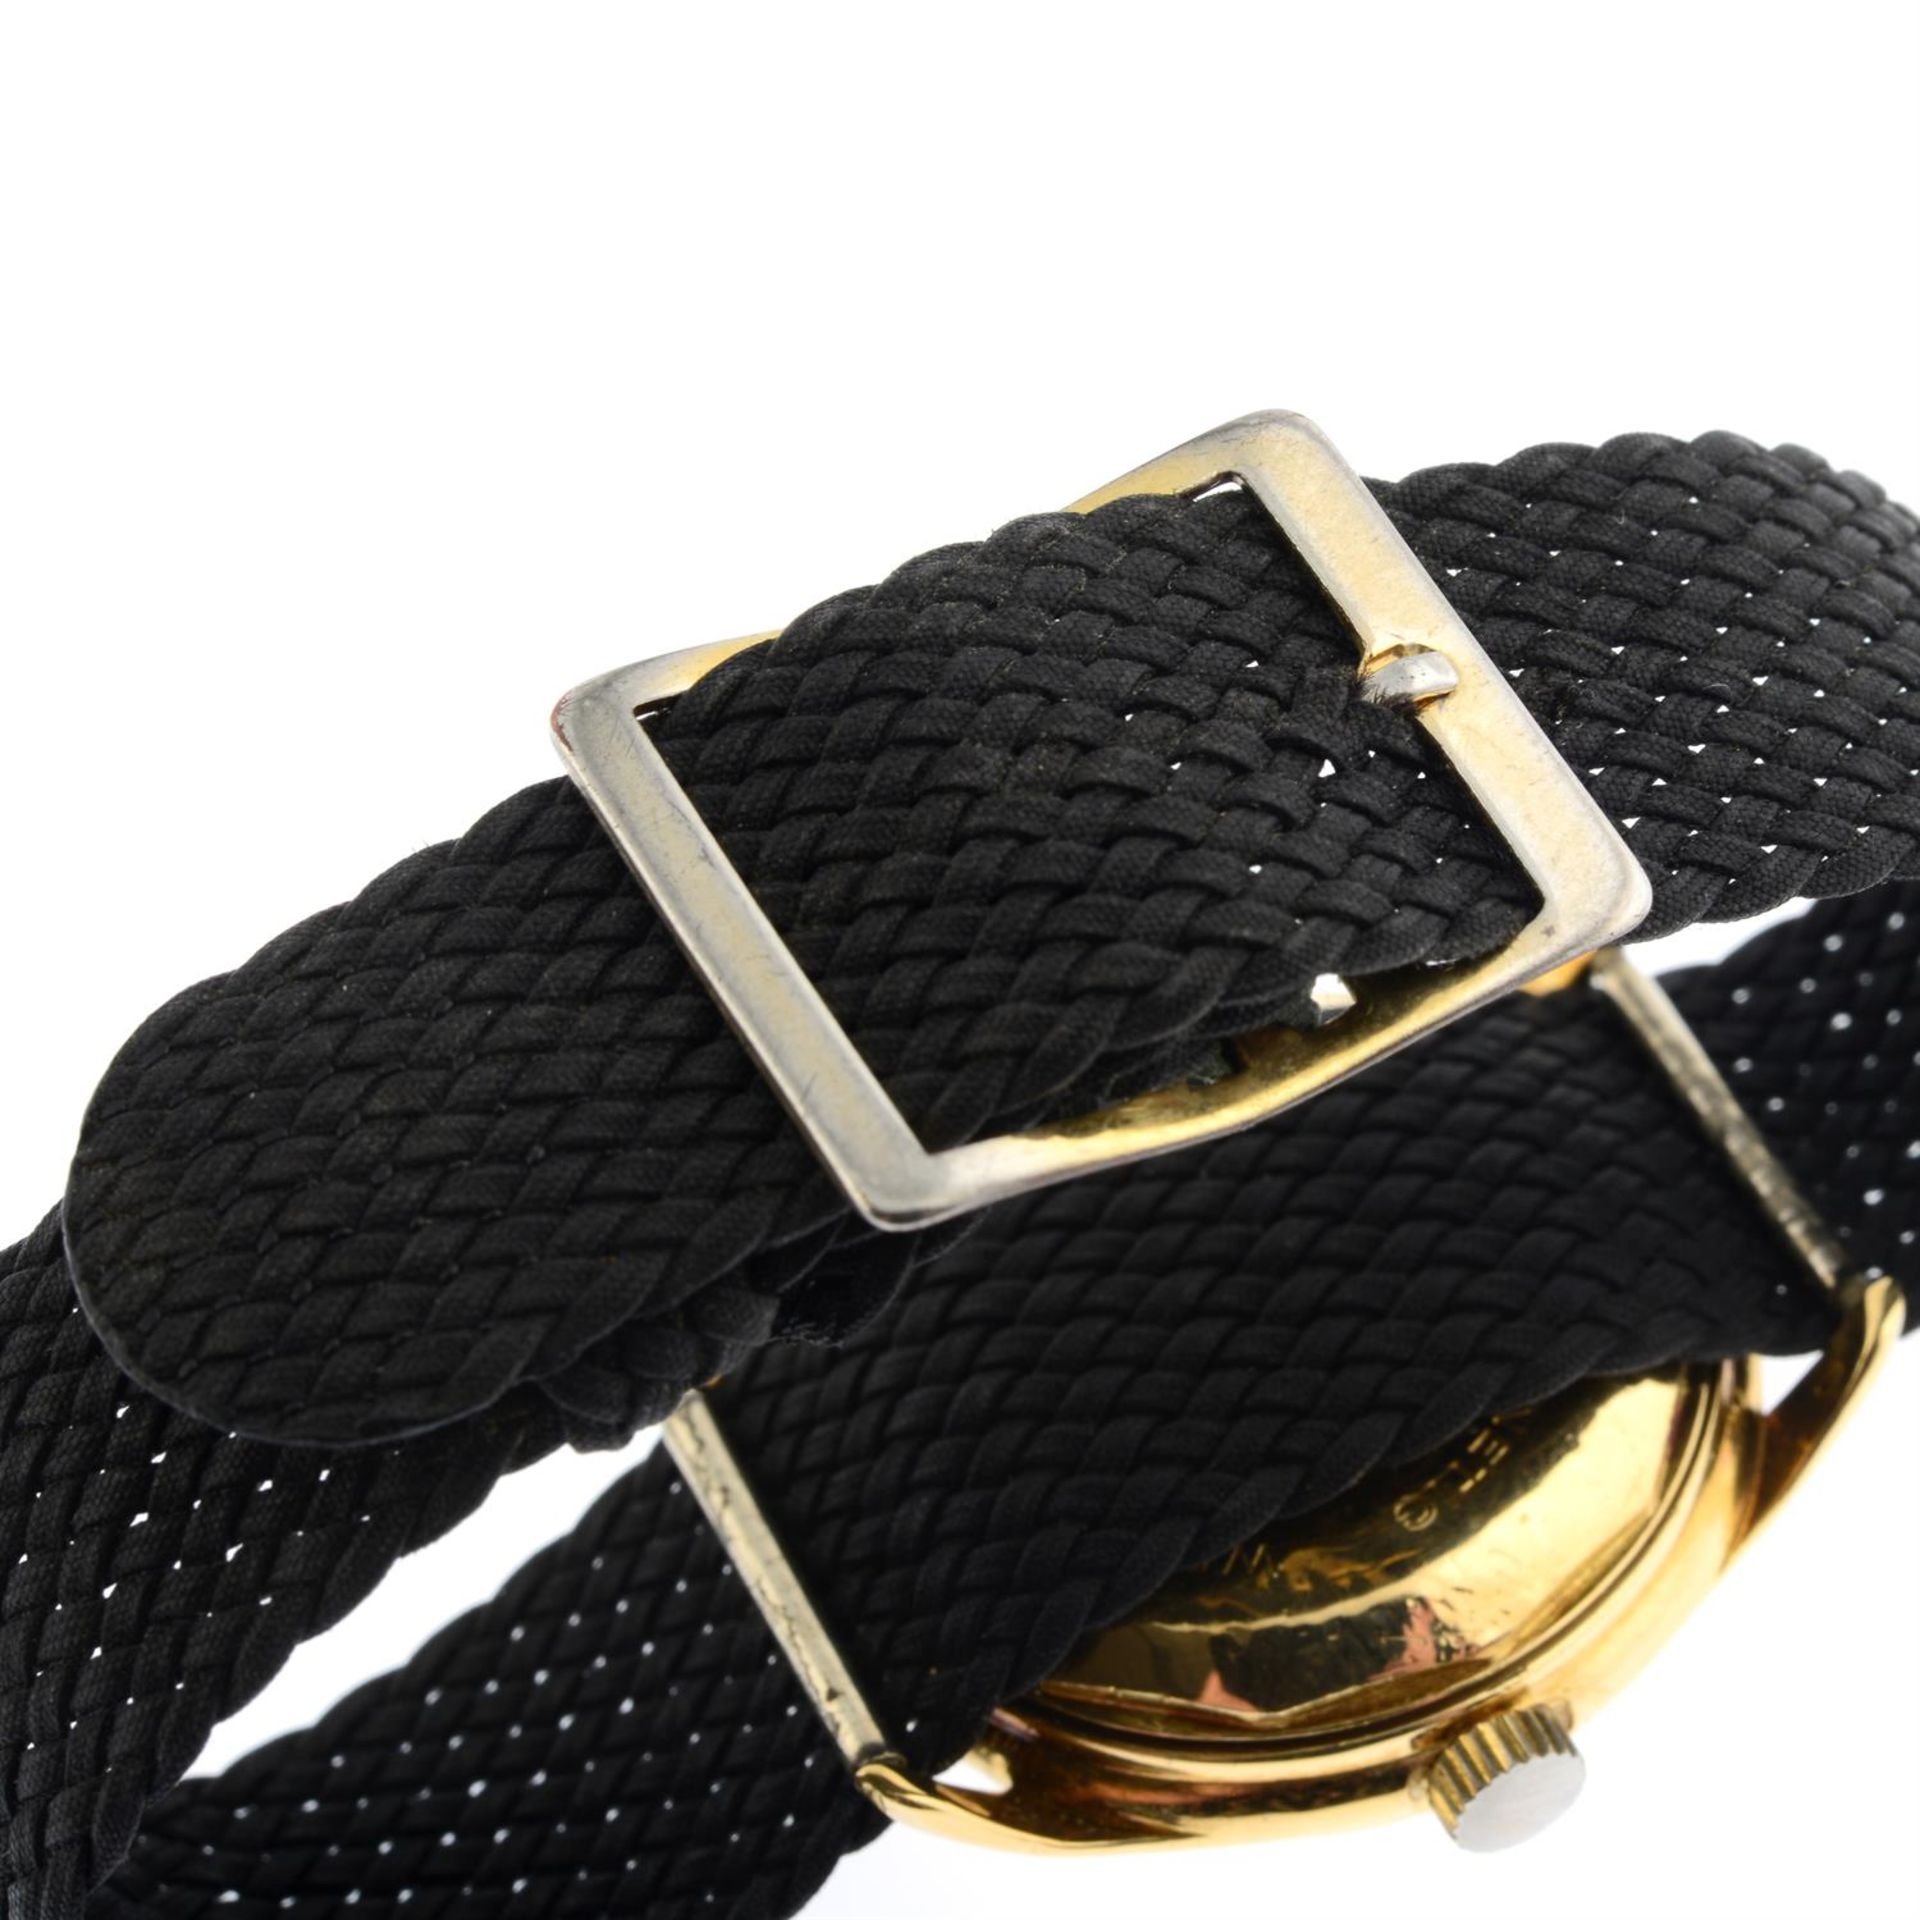 EBEL - a yellow metal wrist watch, 33mm. - Image 3 of 6